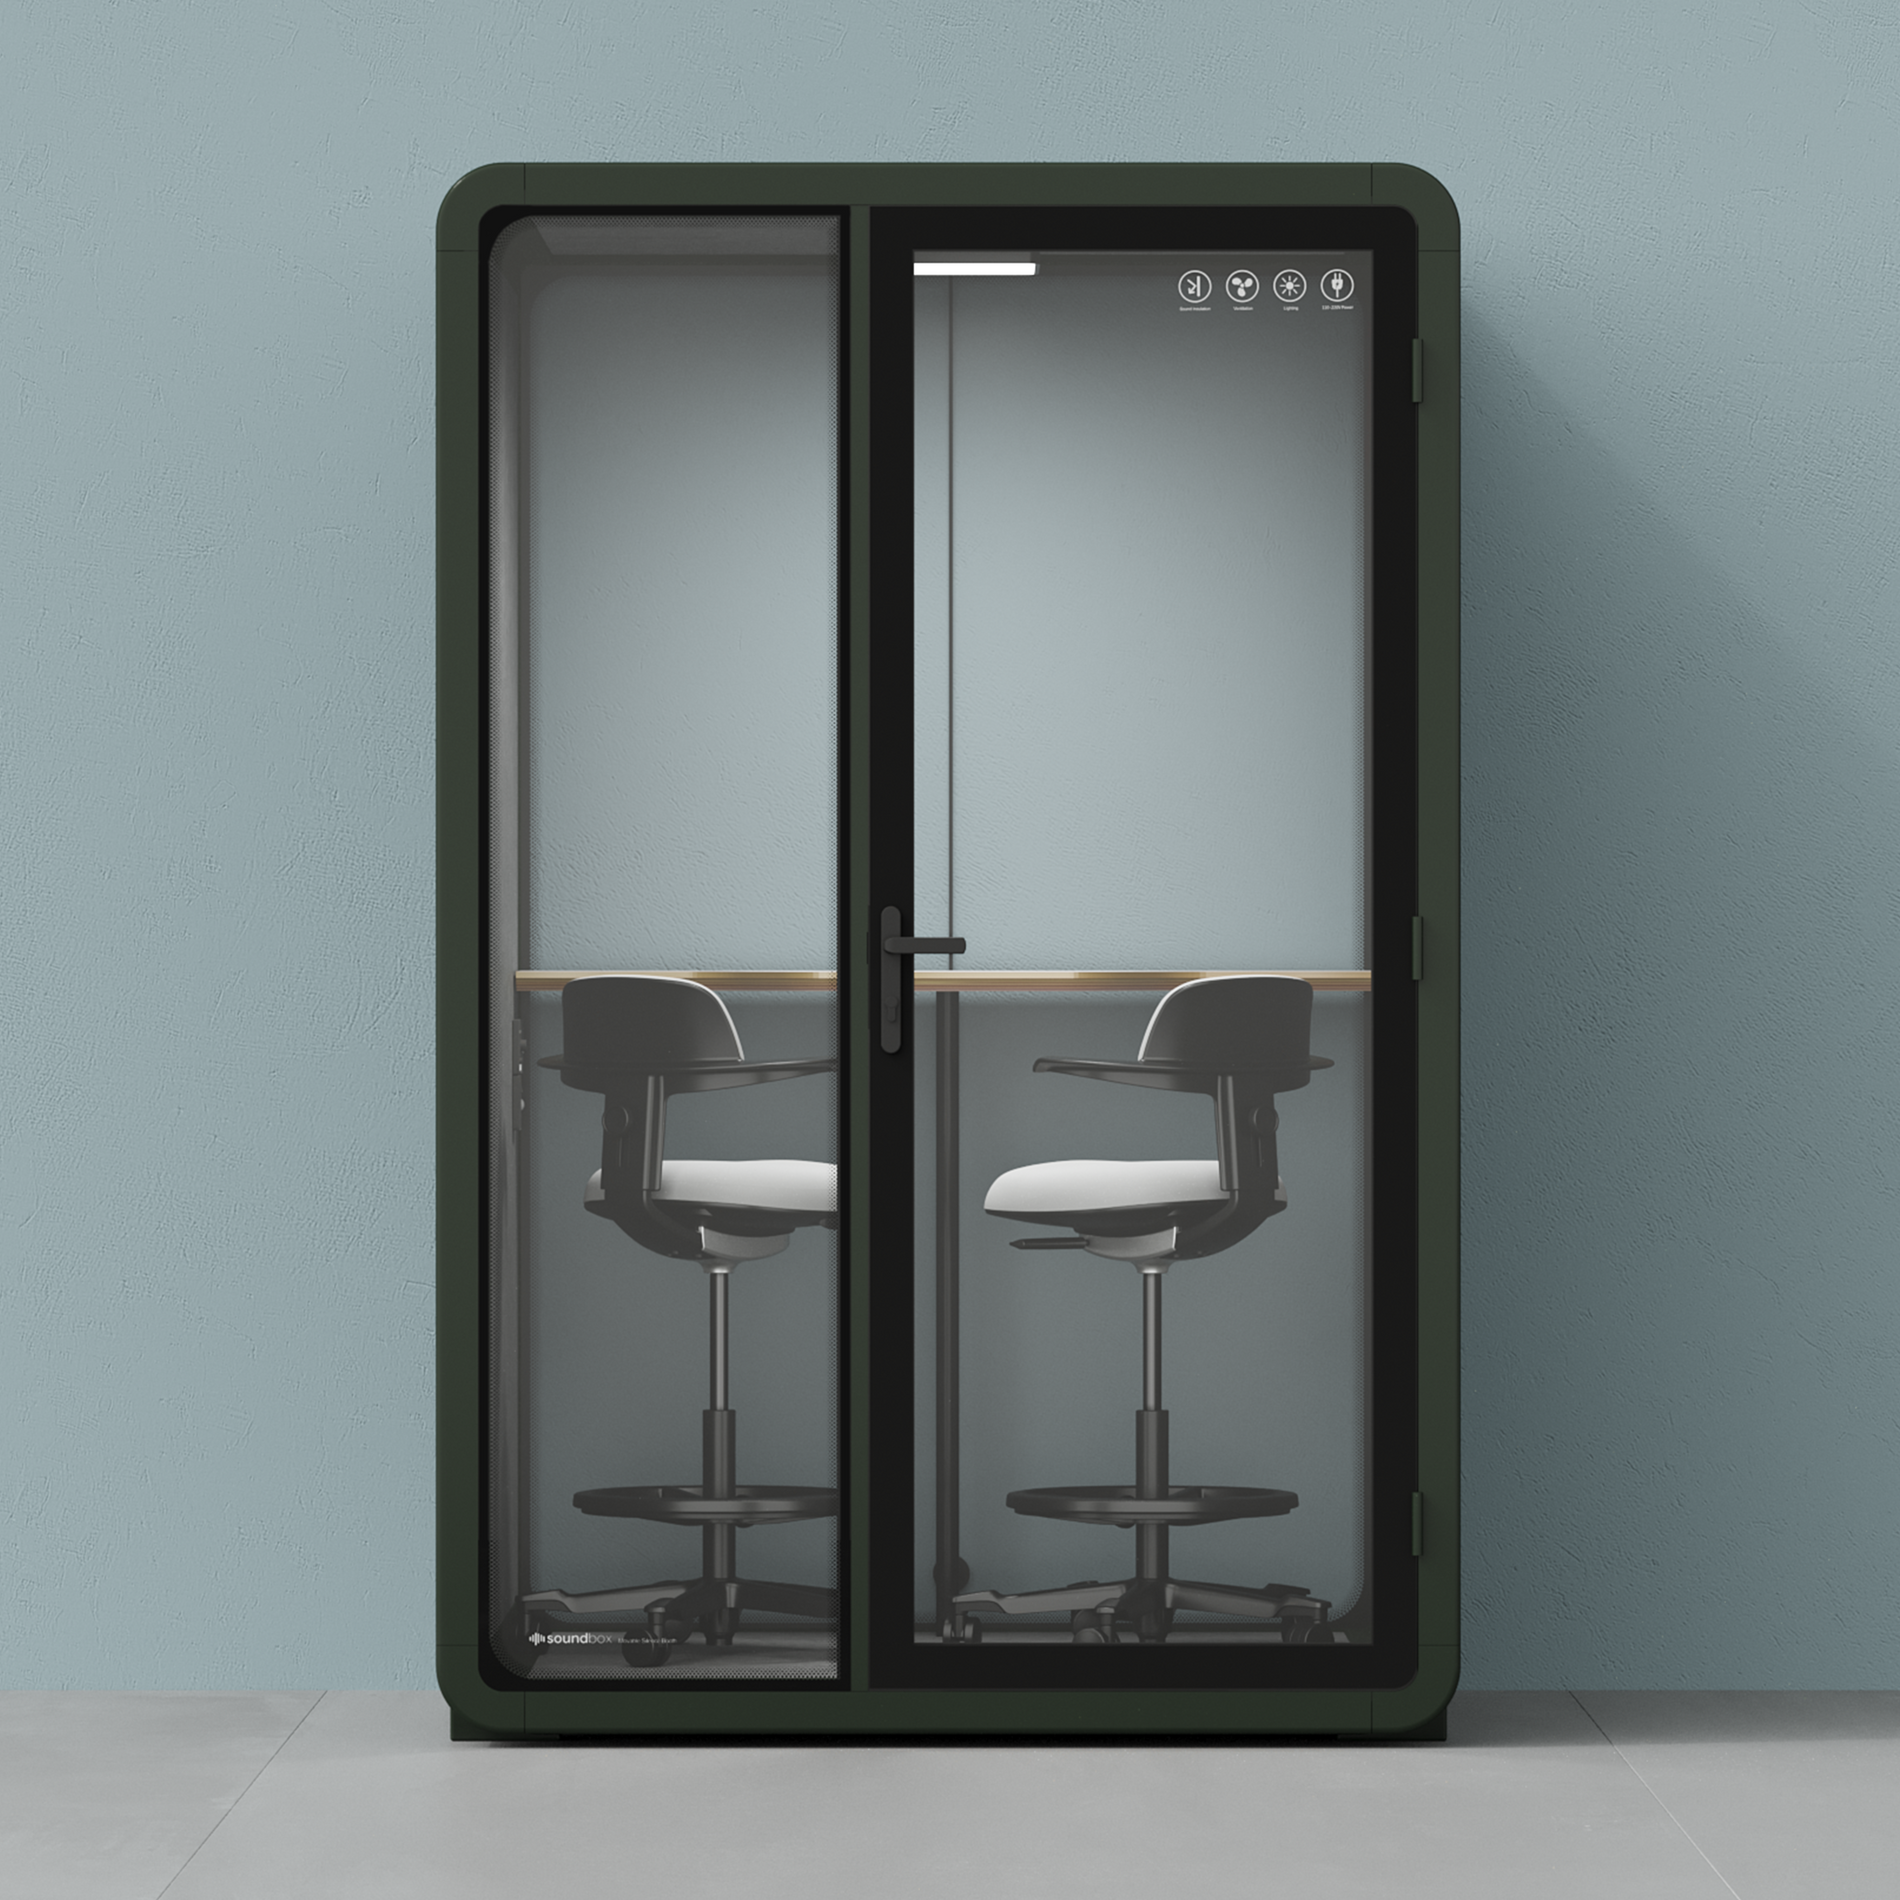 Quell - CoWorker - Cápsula para 2 personasDark Green / Dark Gray / Dual Zoom Room + Device Shelf + 2 Barstools